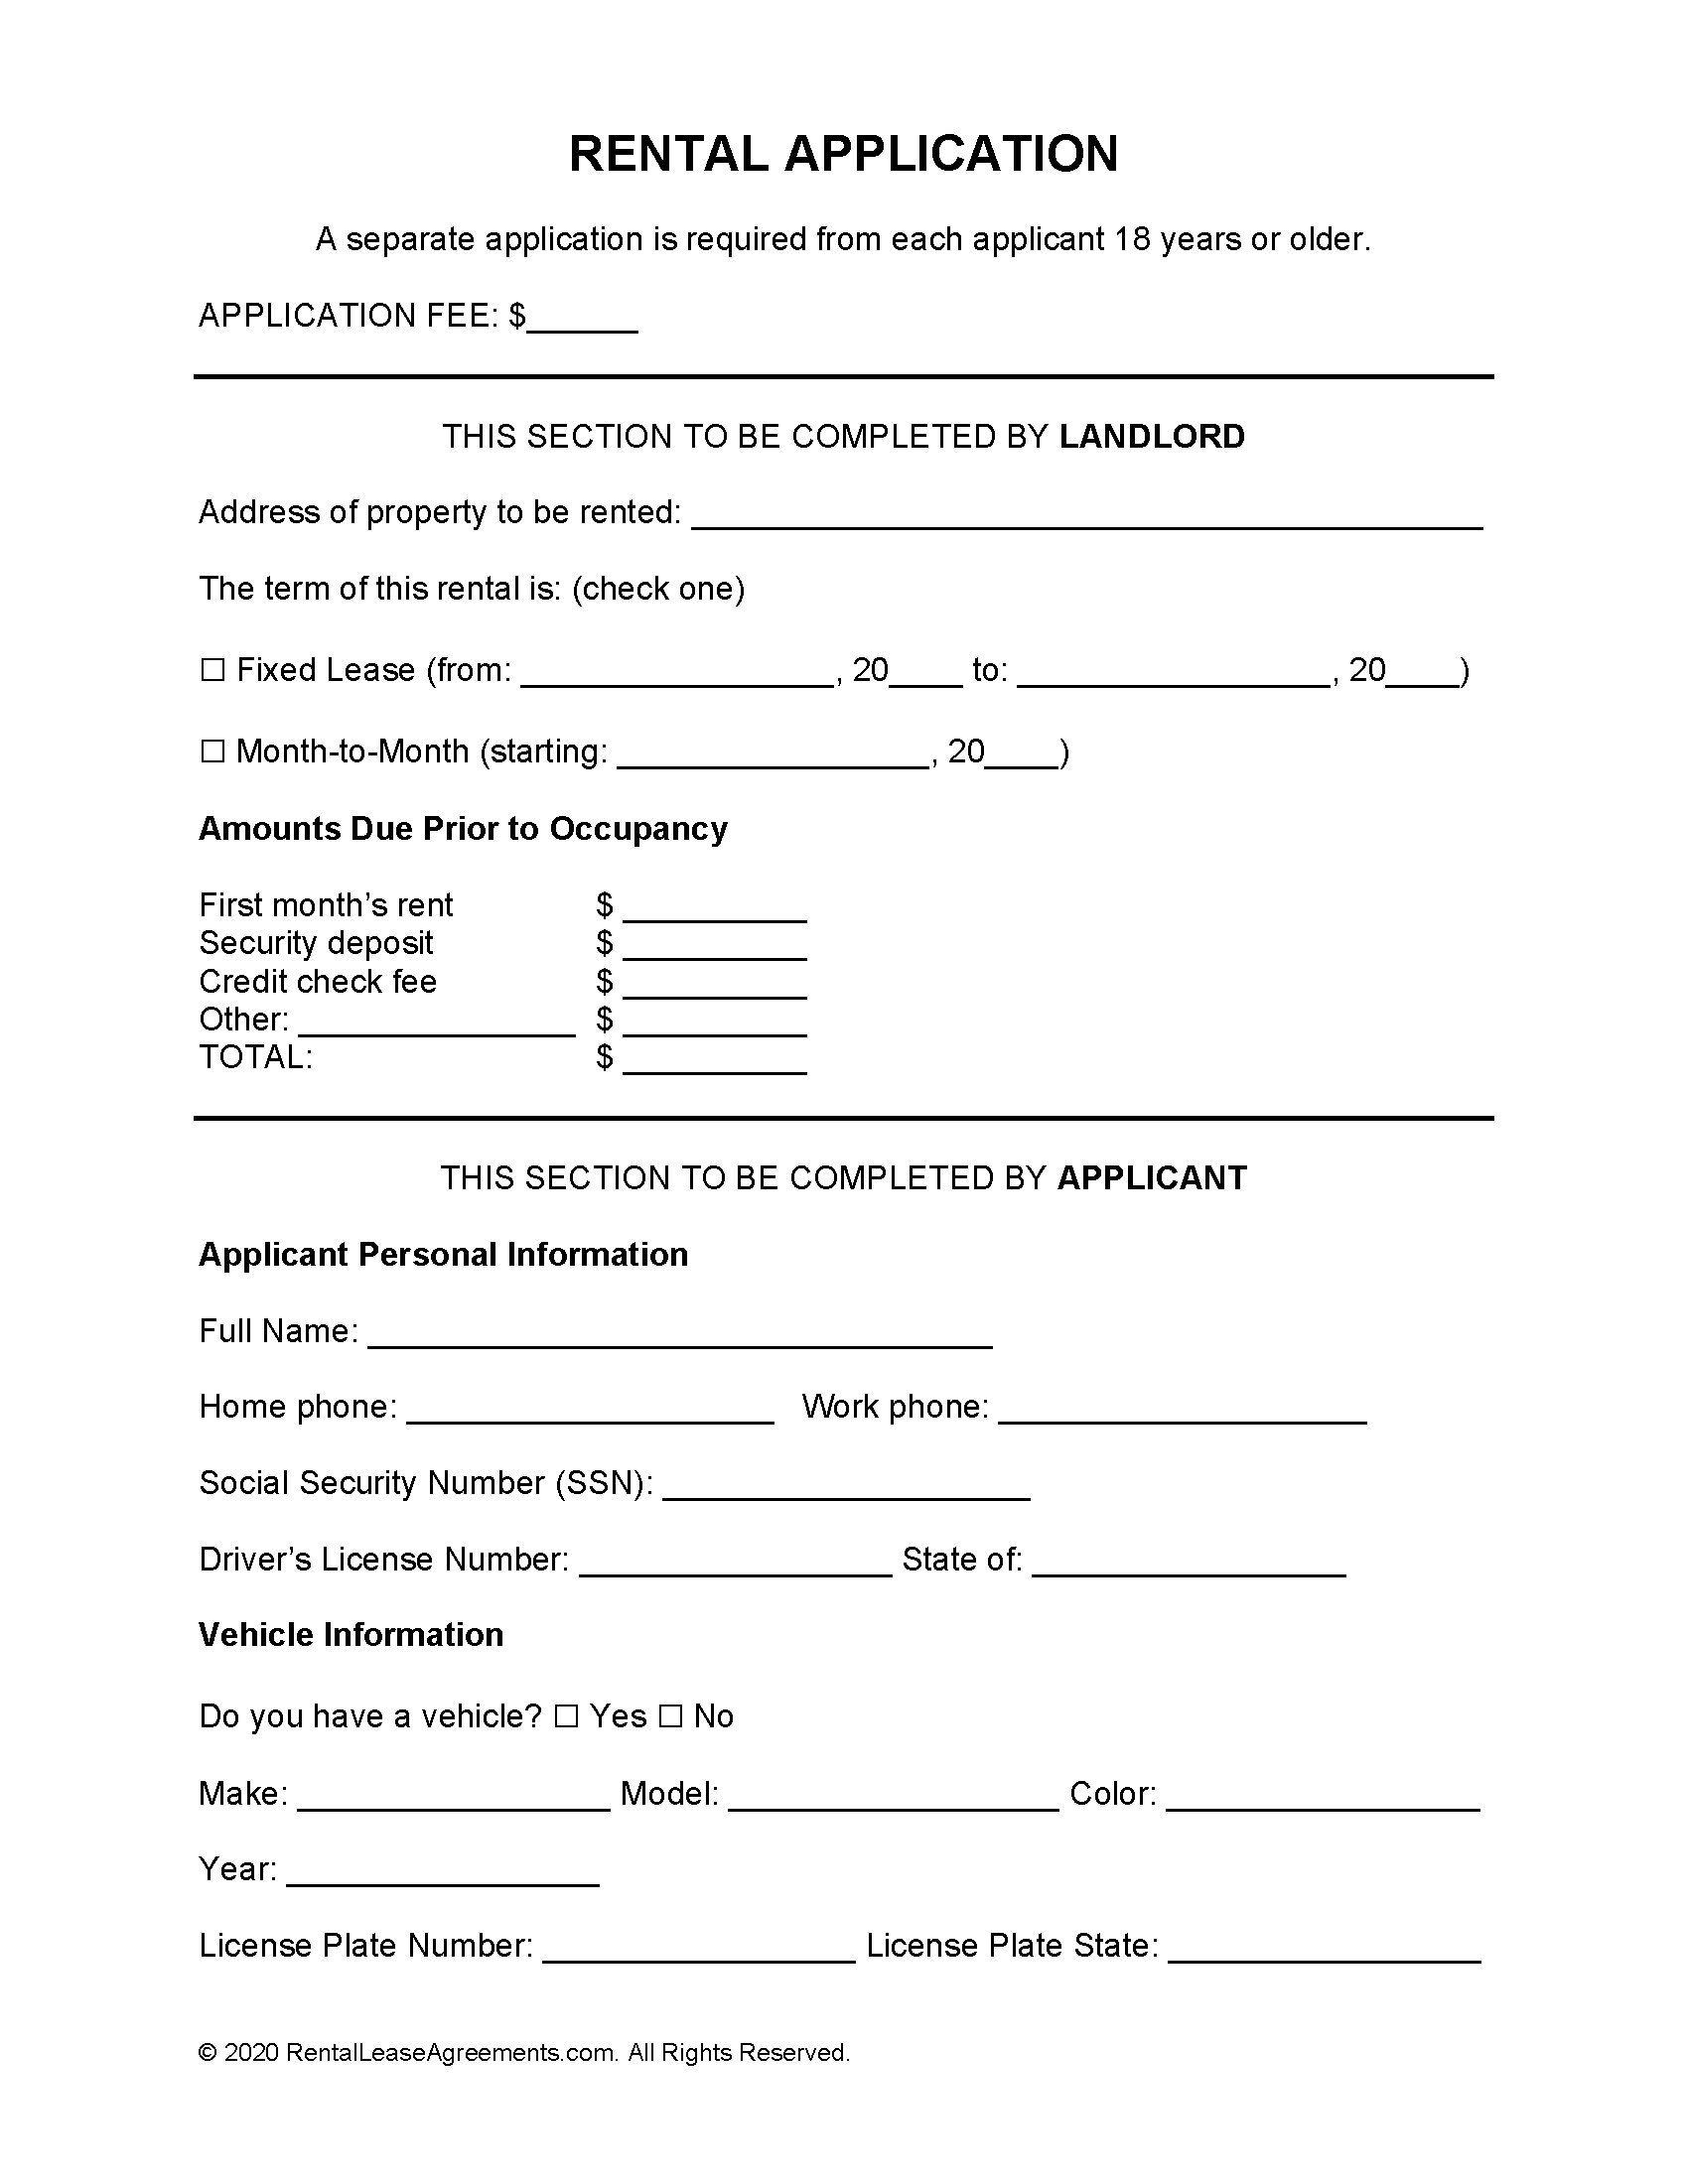 Free Rental Application Template - PDF - Word